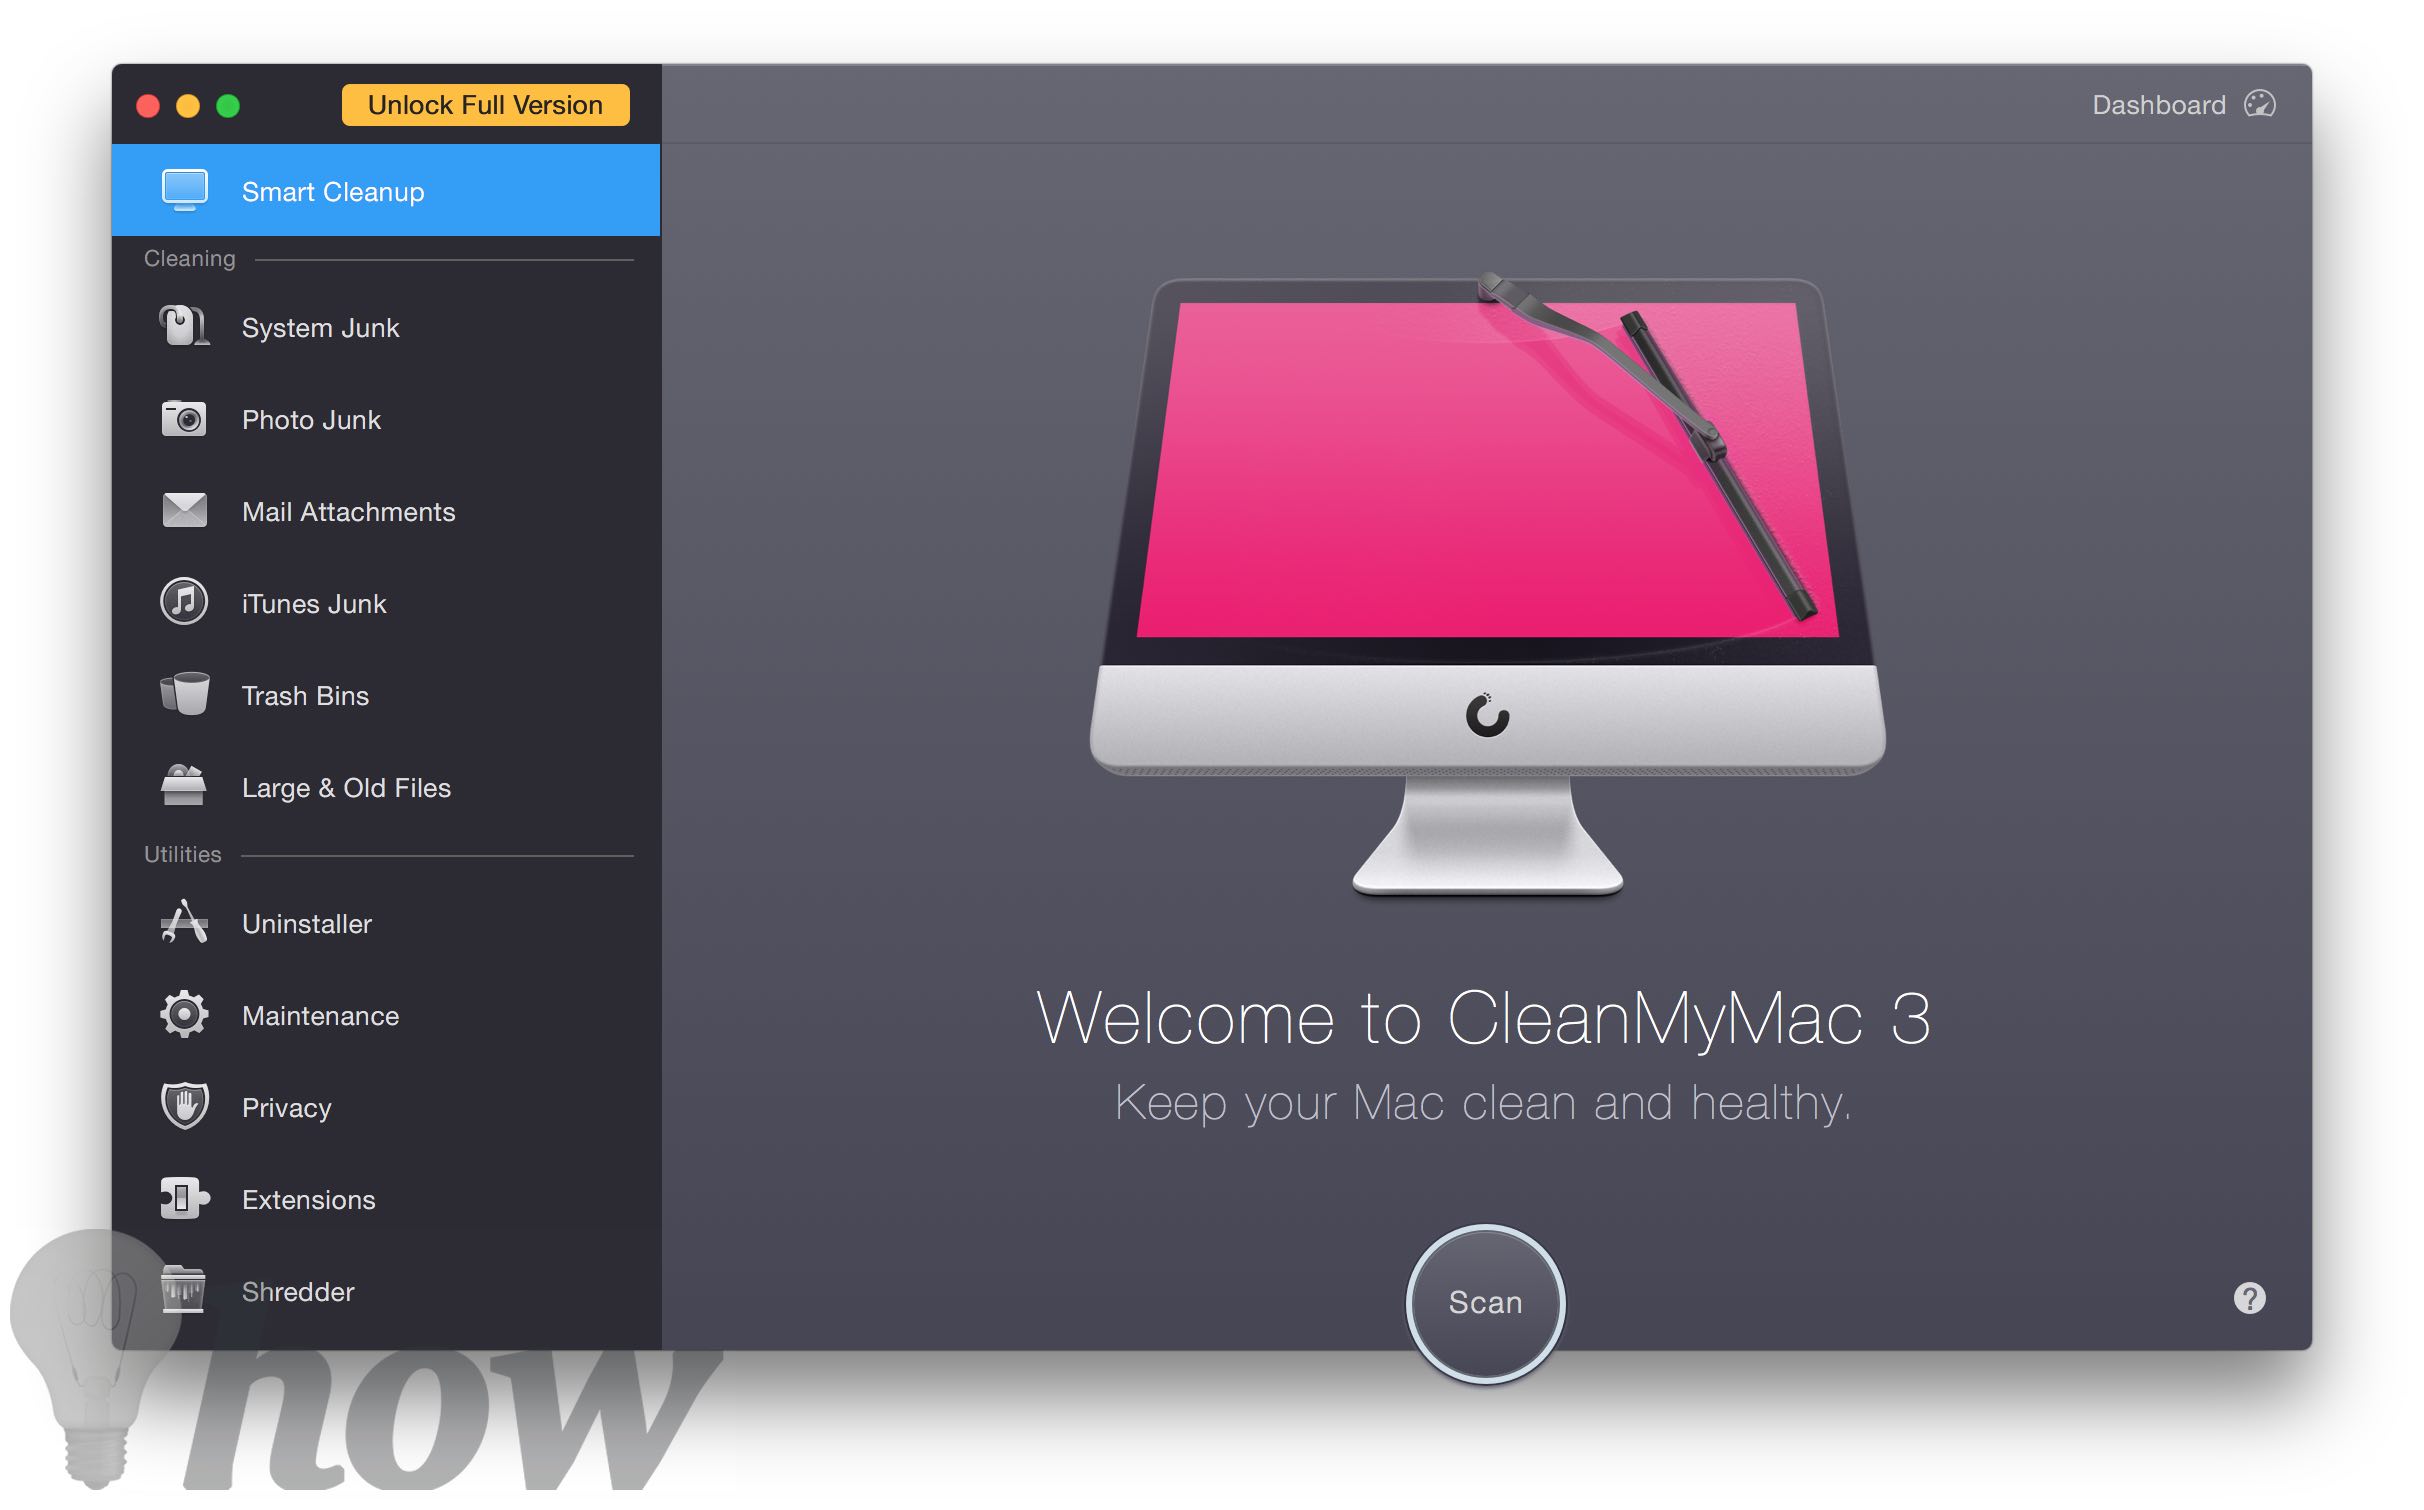 Clean Your Mac App Reviews